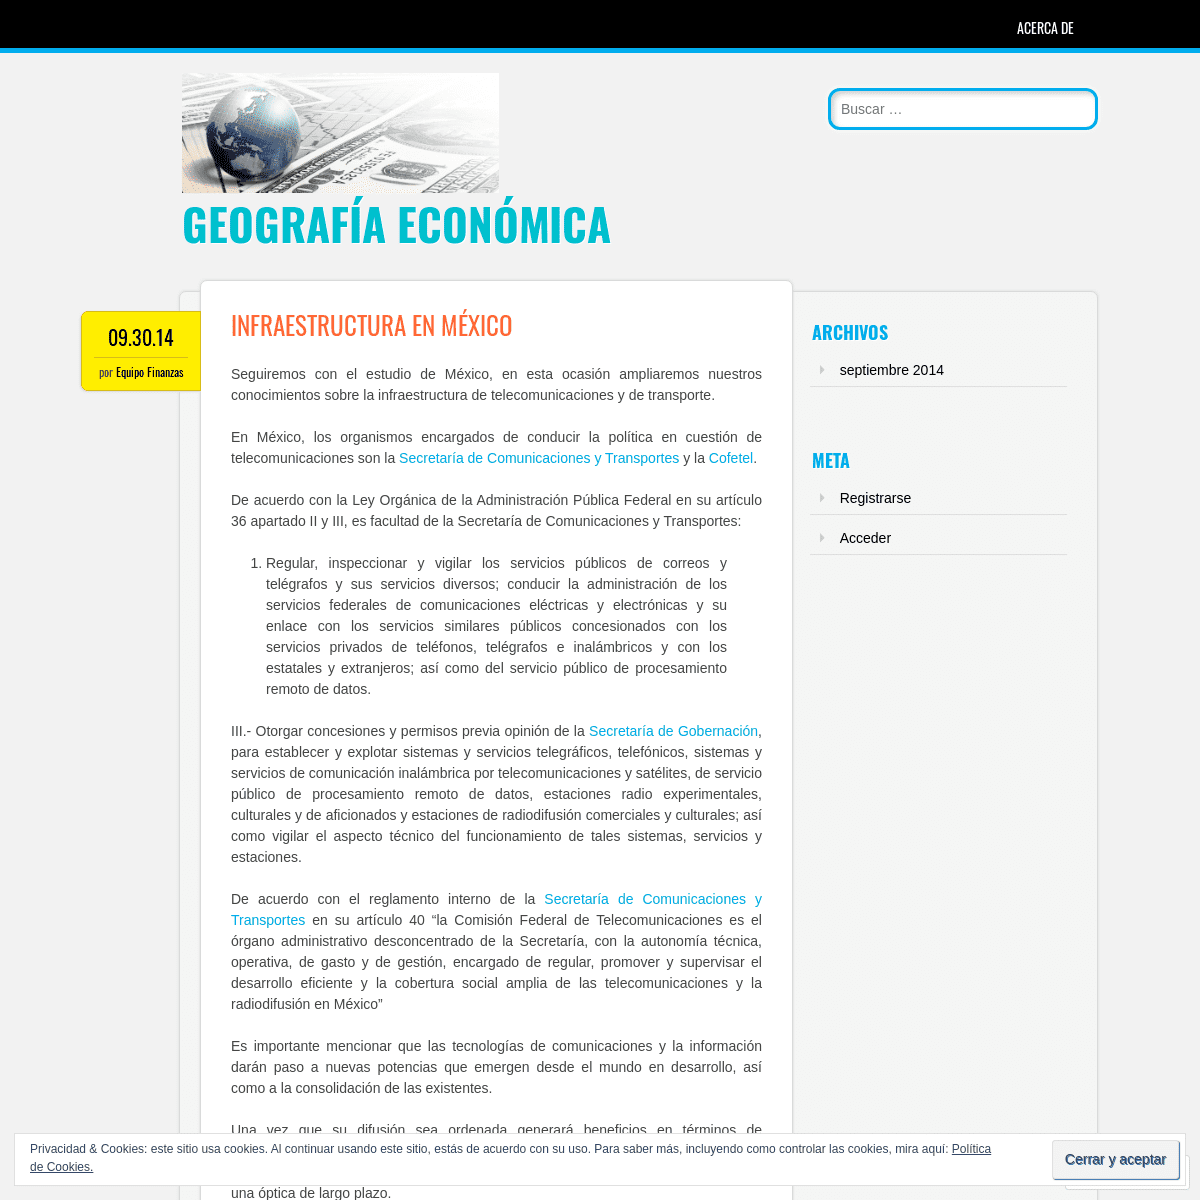 A complete backup of geografiaeconomicaunivia.wordpress.com